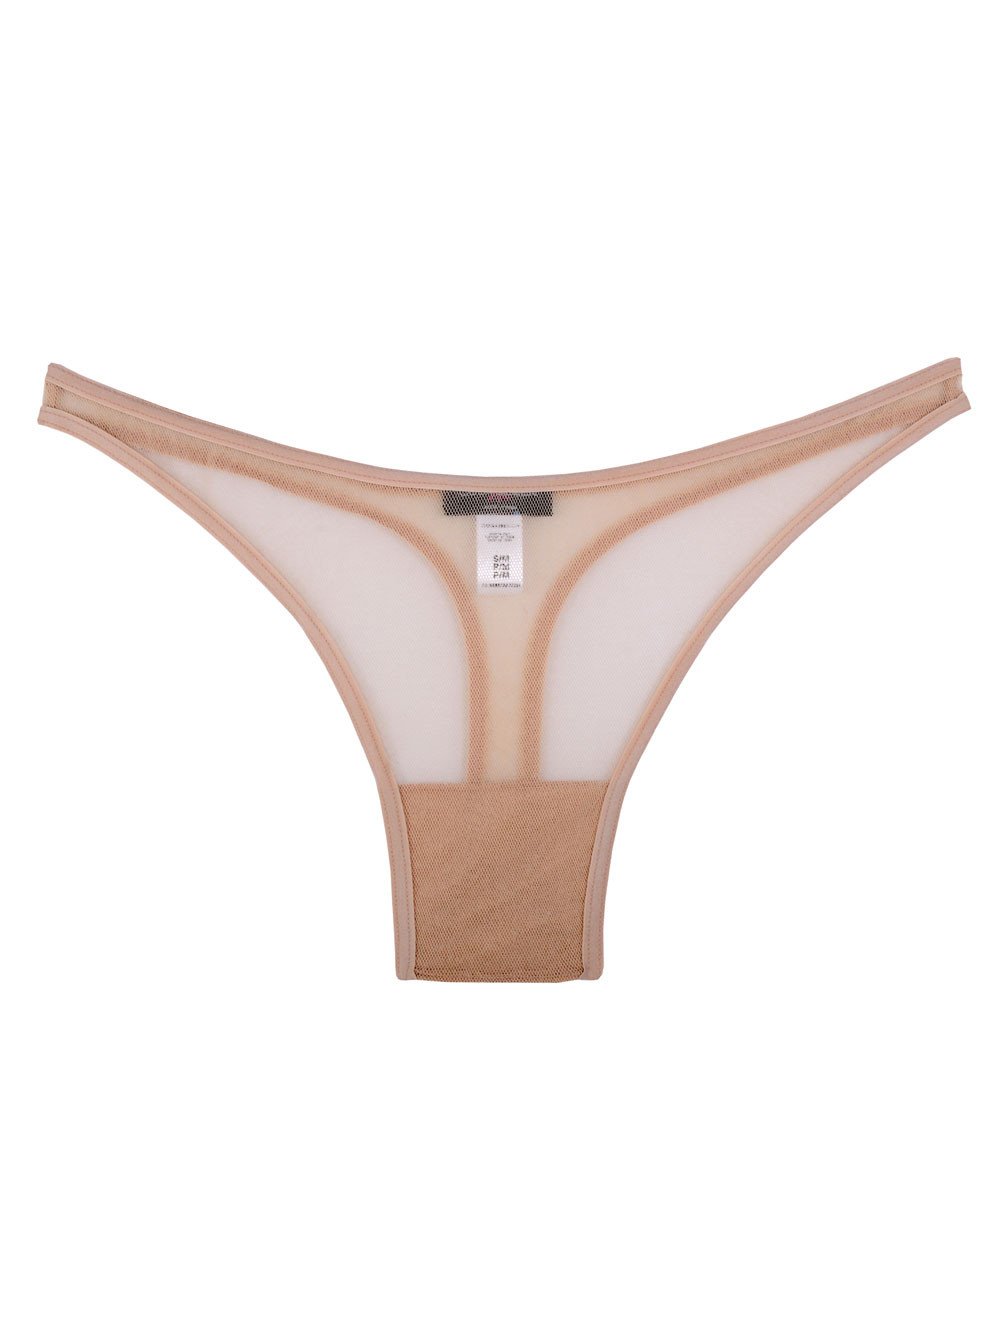 Cosabella THONGS L/XL / BLUSH Cosabella Soire Sheer Lace Thong Panties